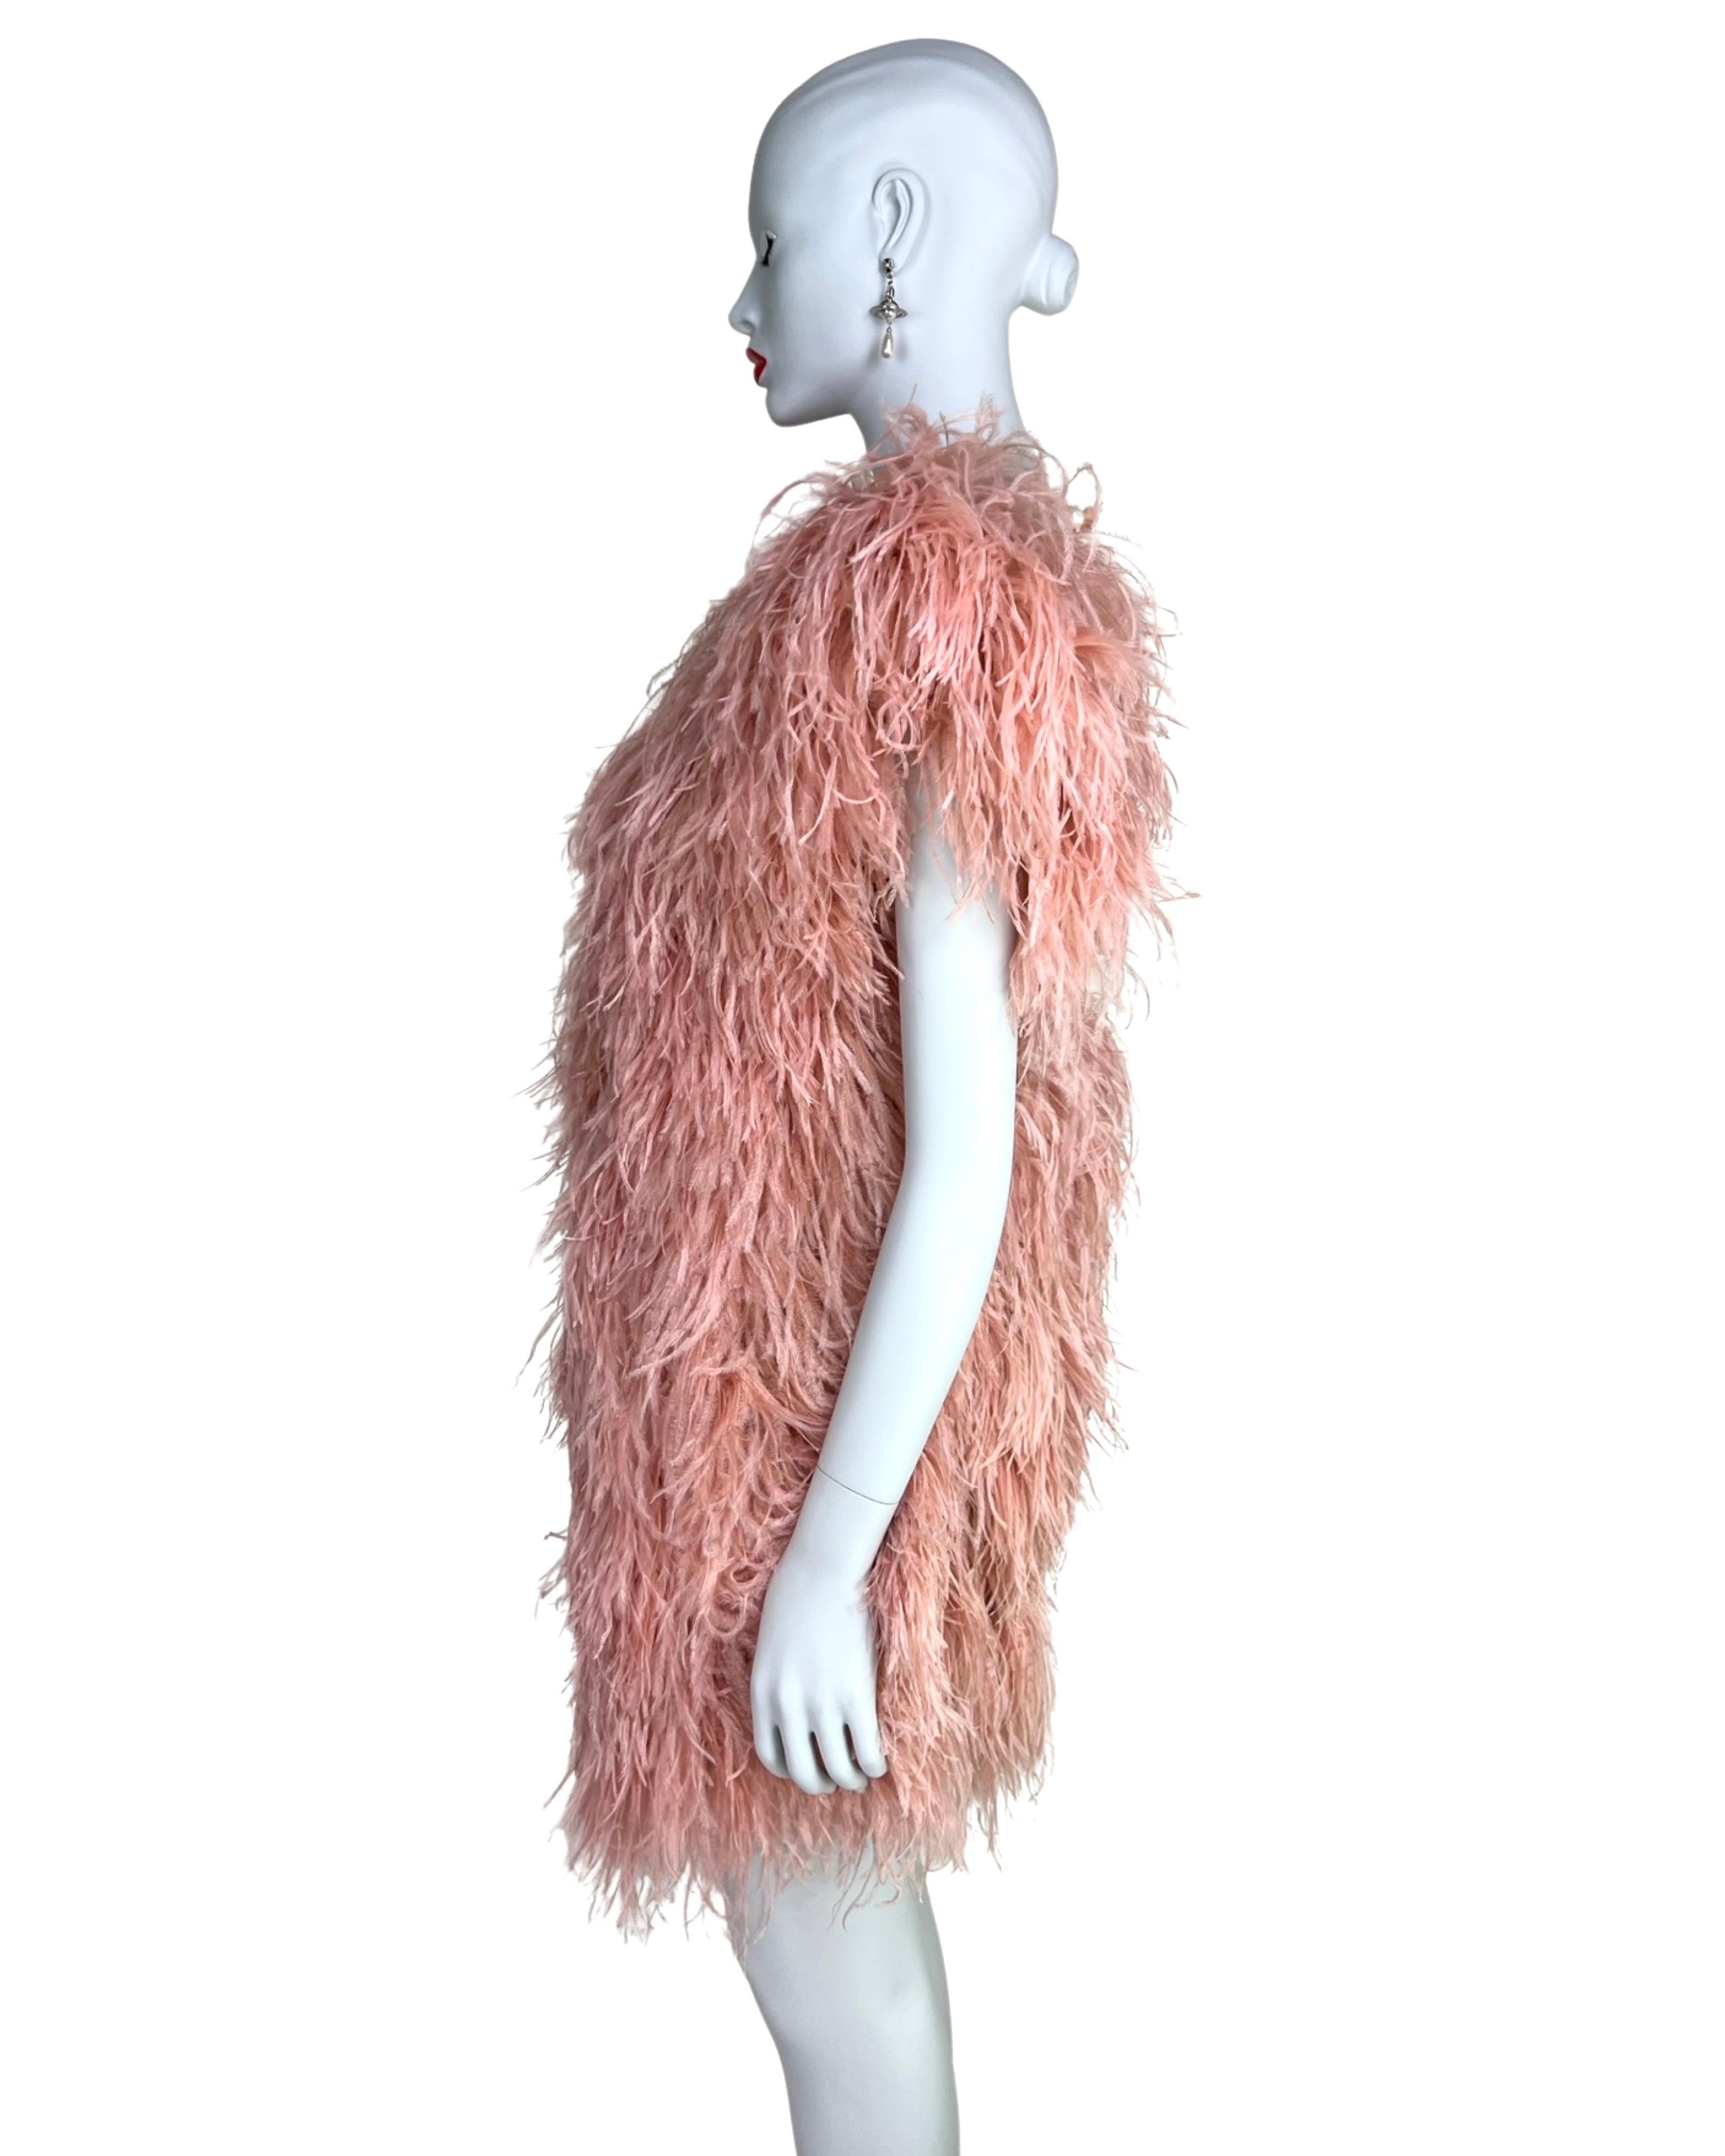 Sonia Rykiel Fall 2010 Ostrich Feather Dress For Sale 2